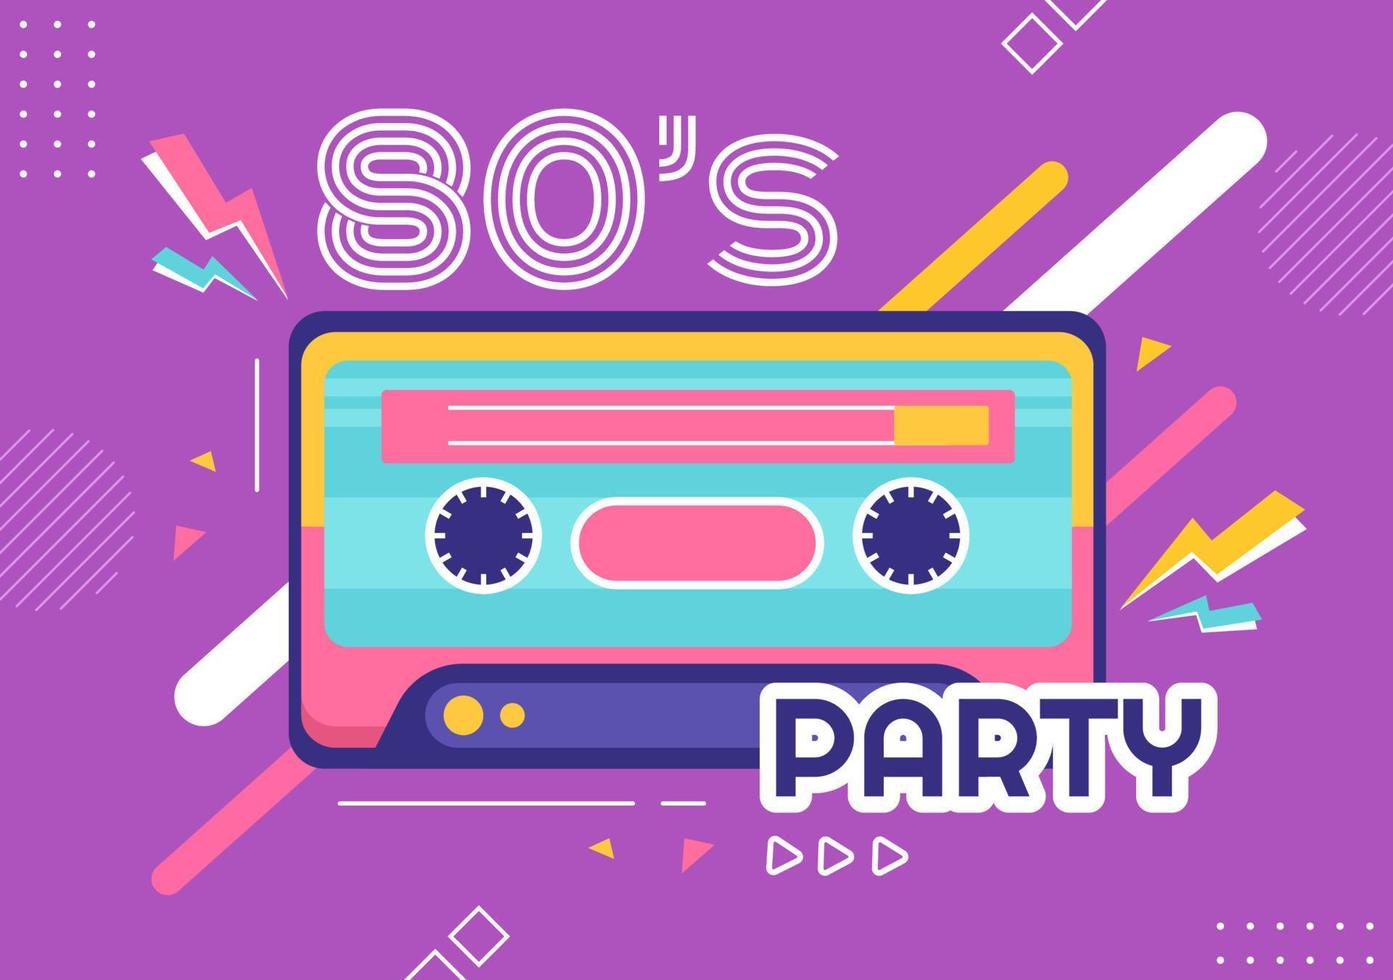 80s Party Cartoon Background Illustration with Retro Music, 1980 Radio ...